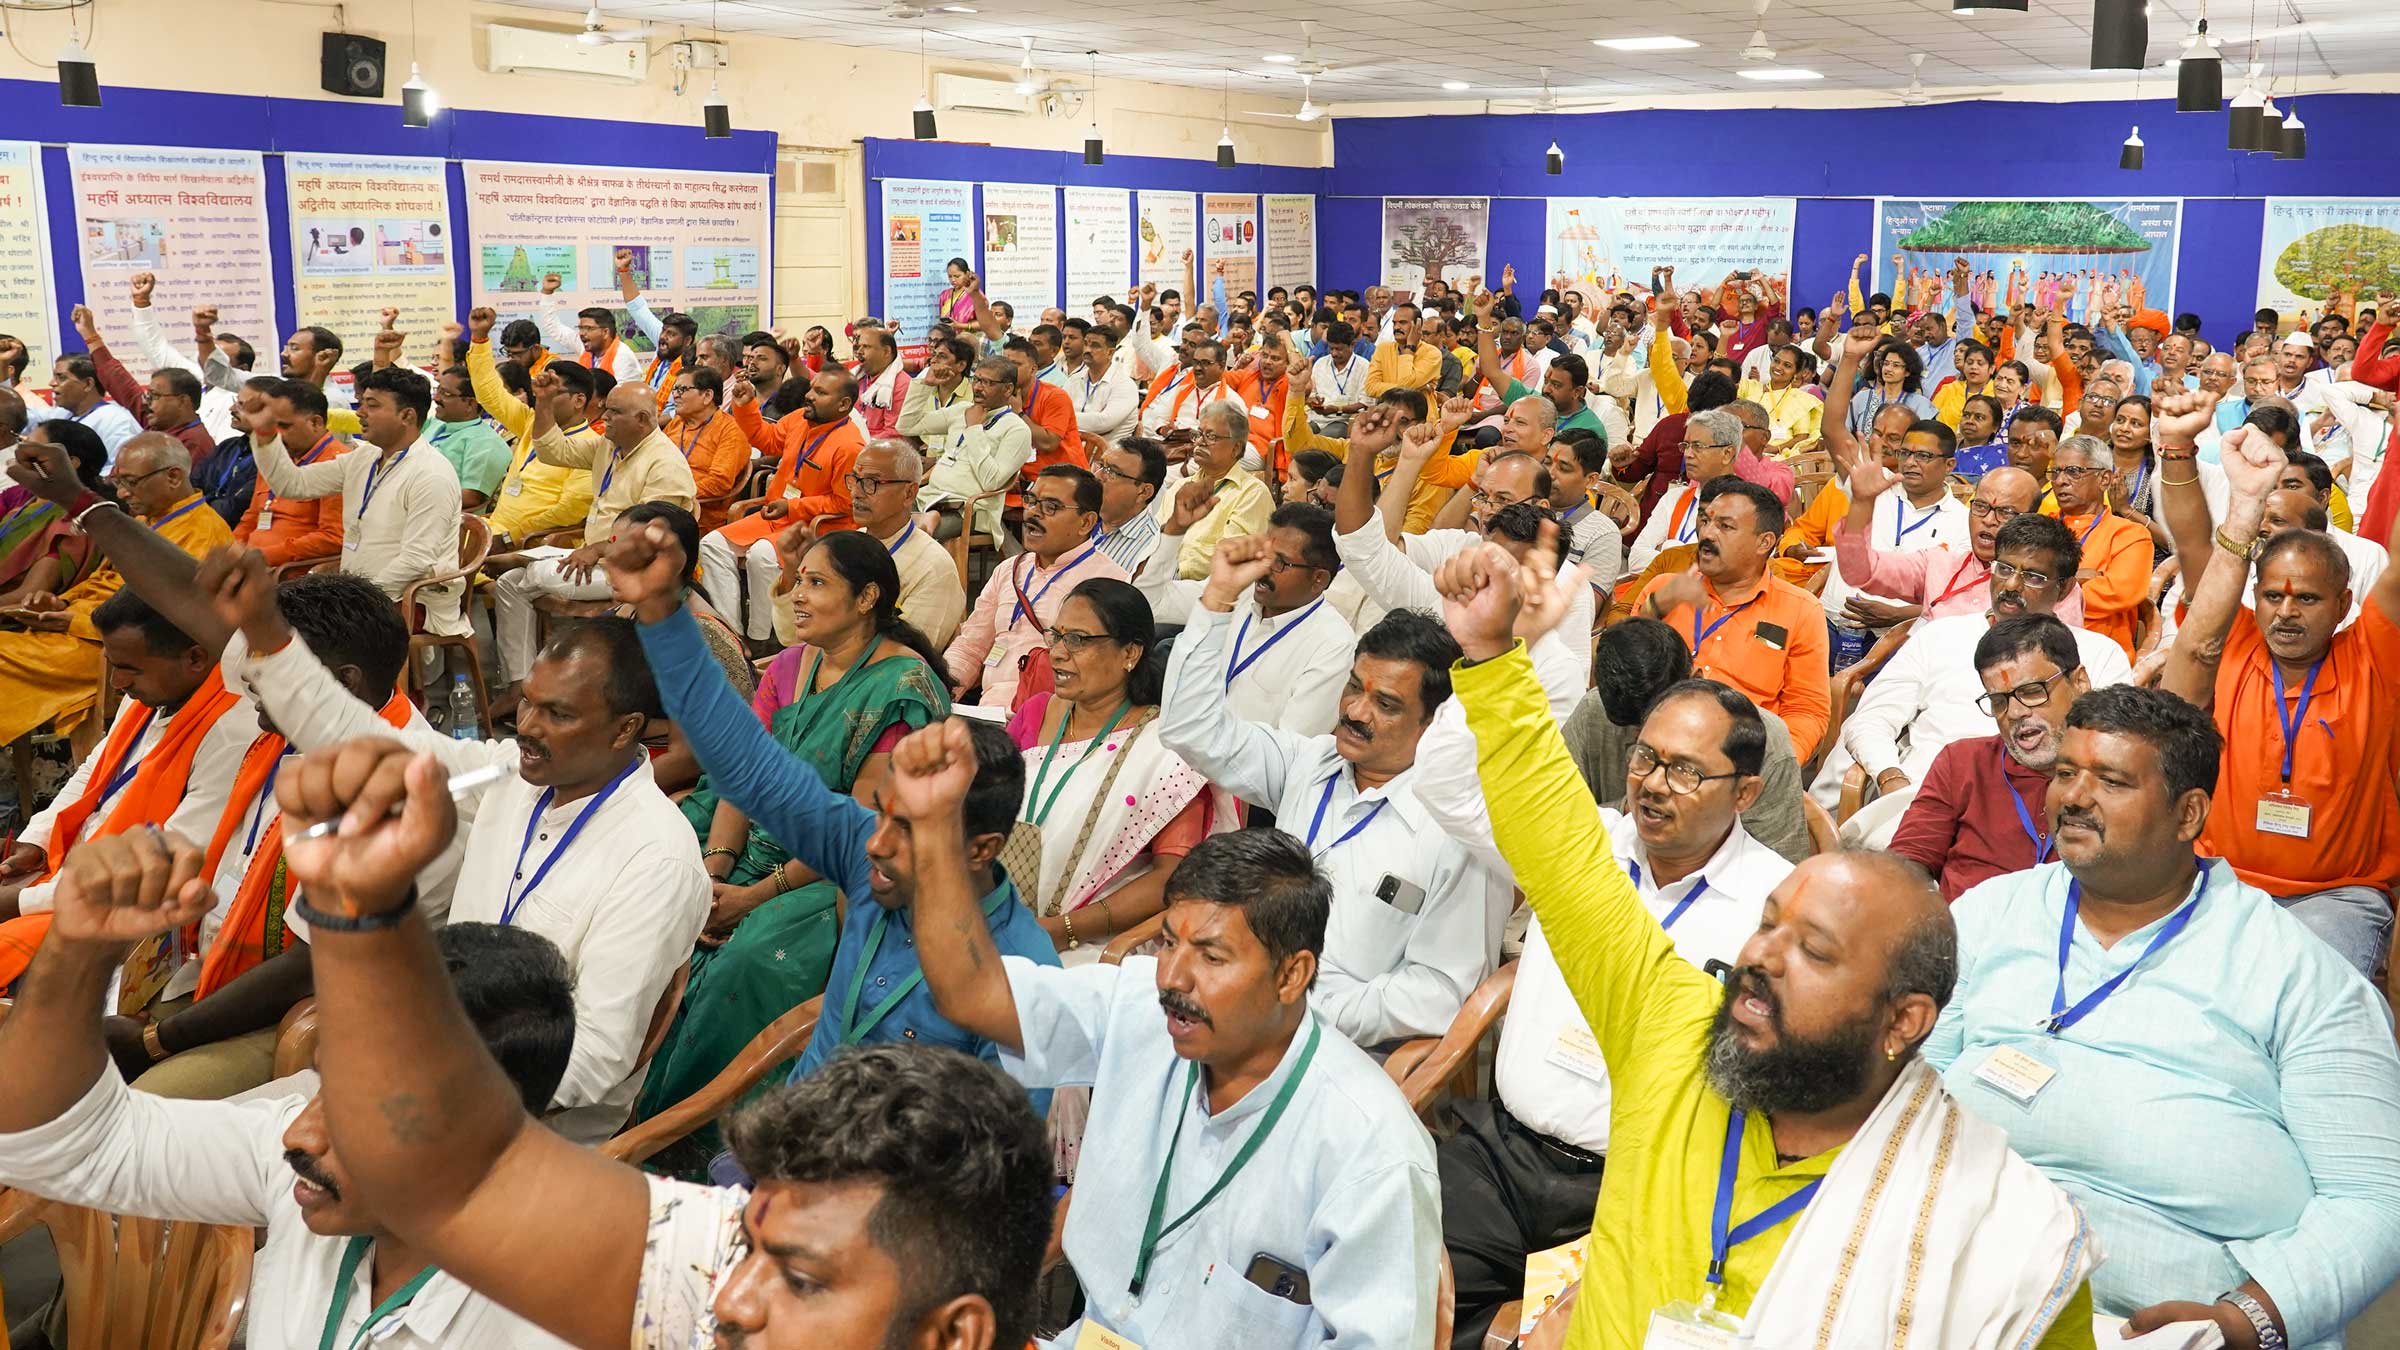 Devout Hindus enthusiastically raising slogans of ‘Jayatu Jayatu Hindurashtram’ at the Mahotsav Venue